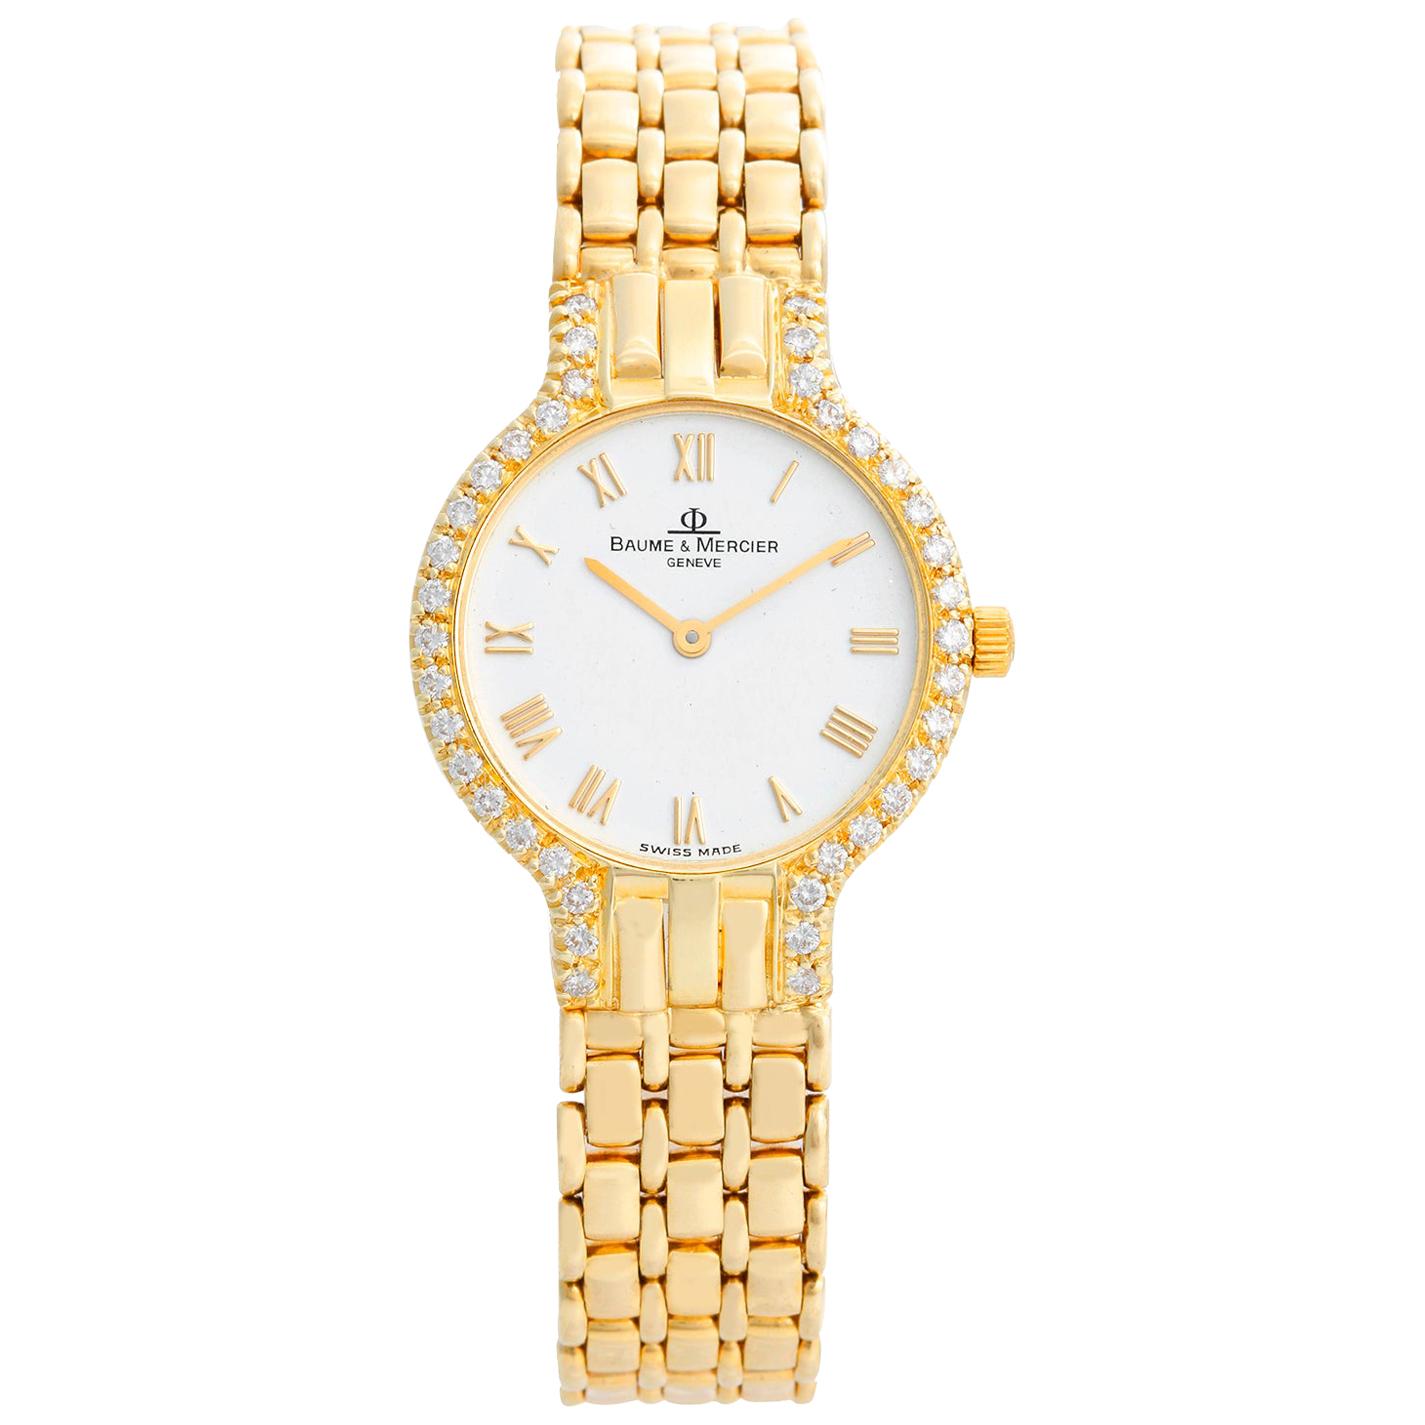 Baume & Mercier 18 Karat Yellow Gold Diamond Watch